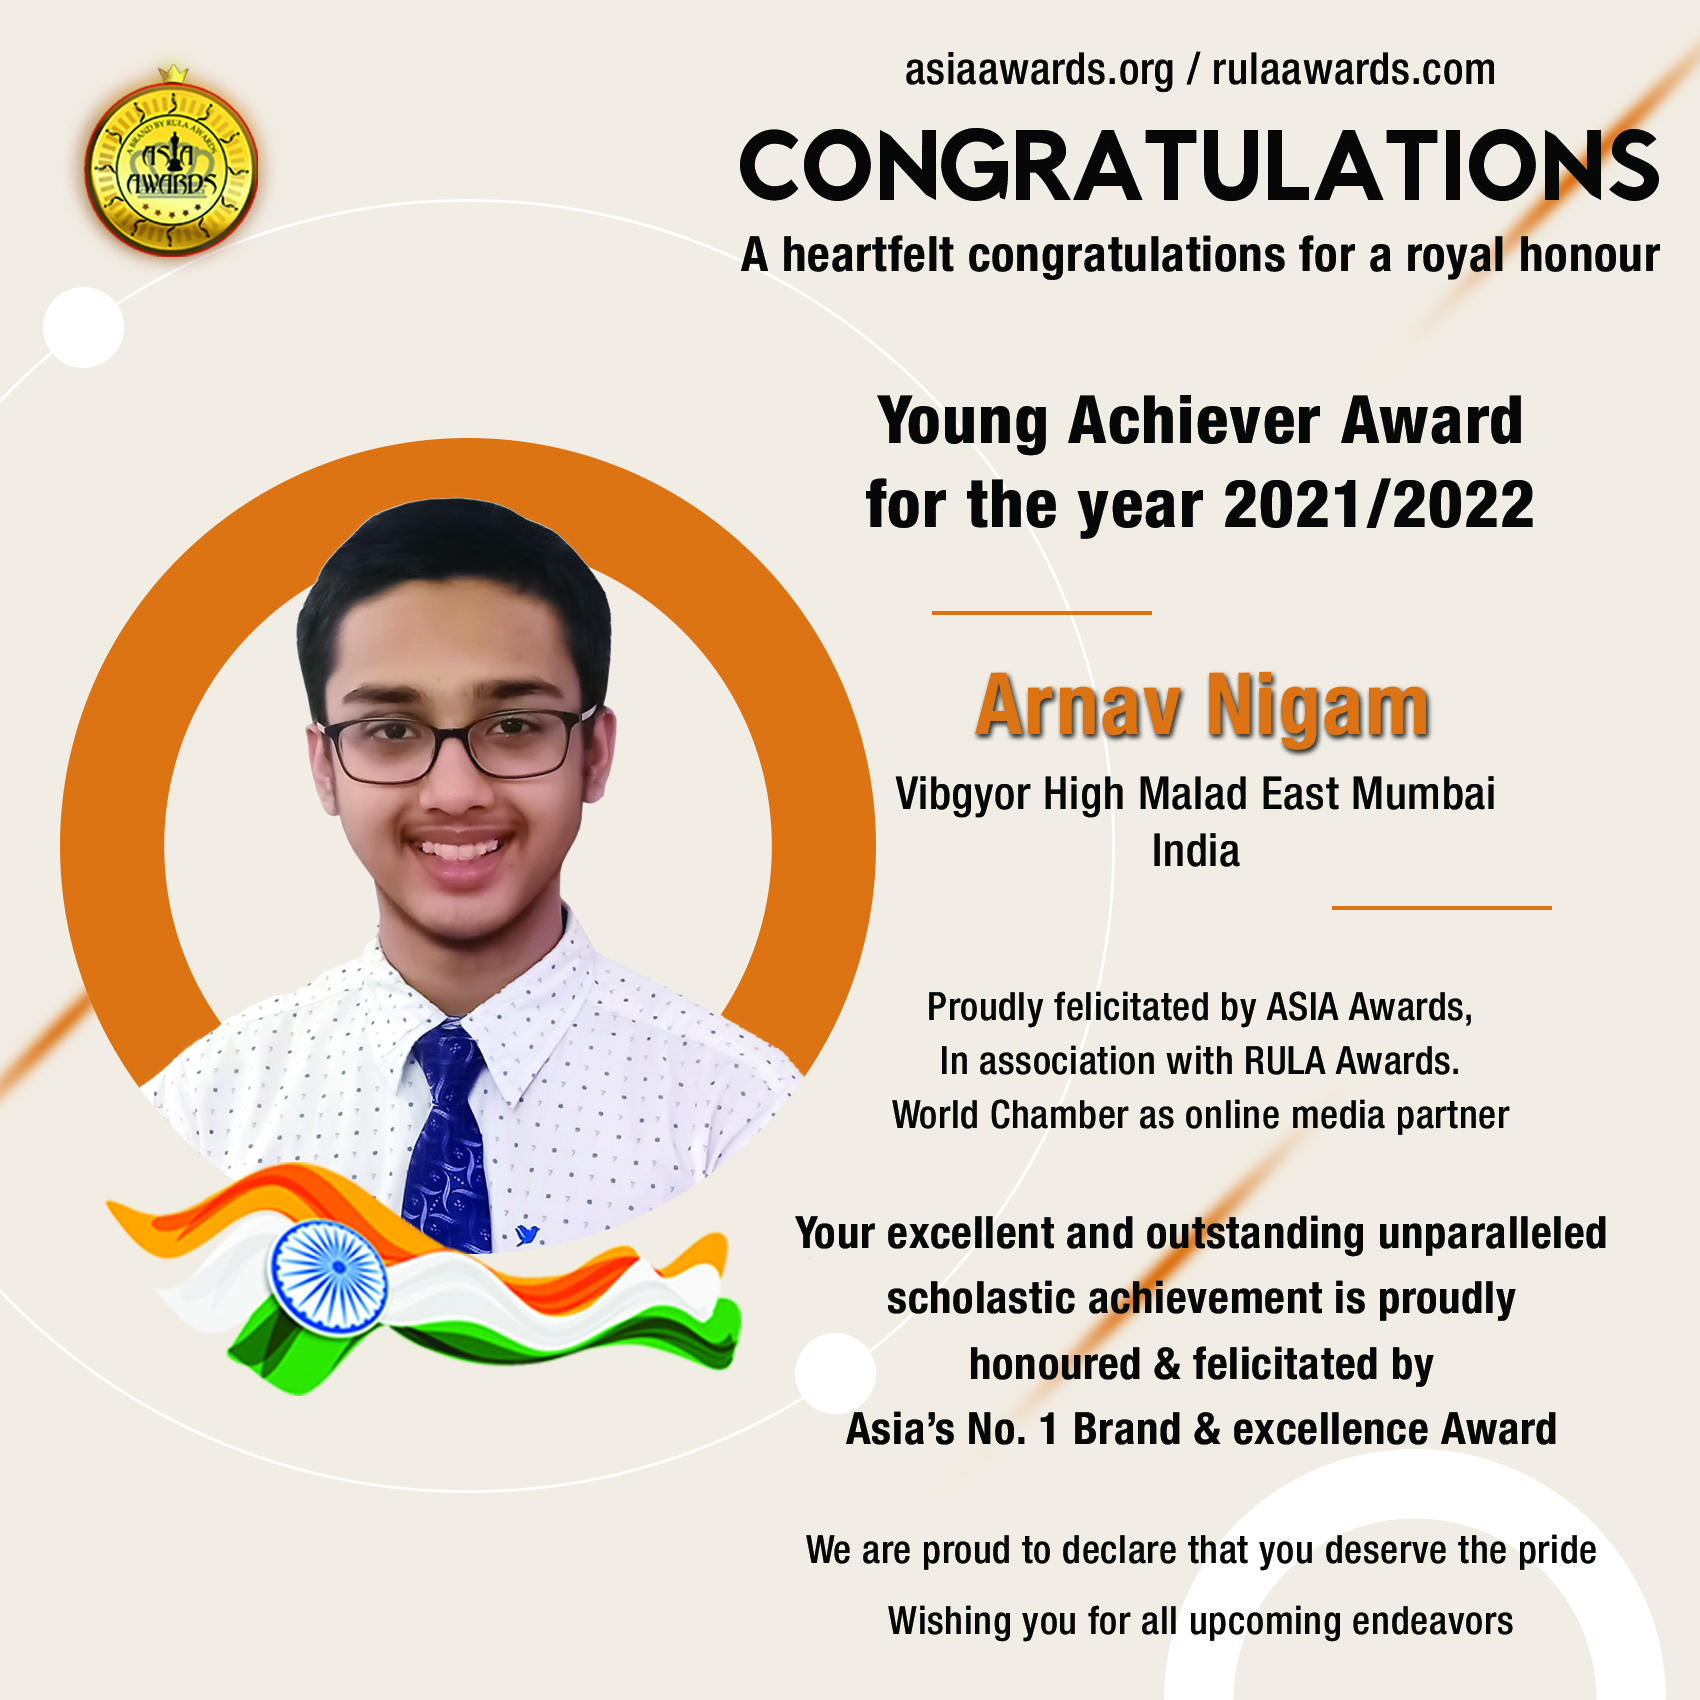 Arnav Nigam has bagged Young Achiever Award